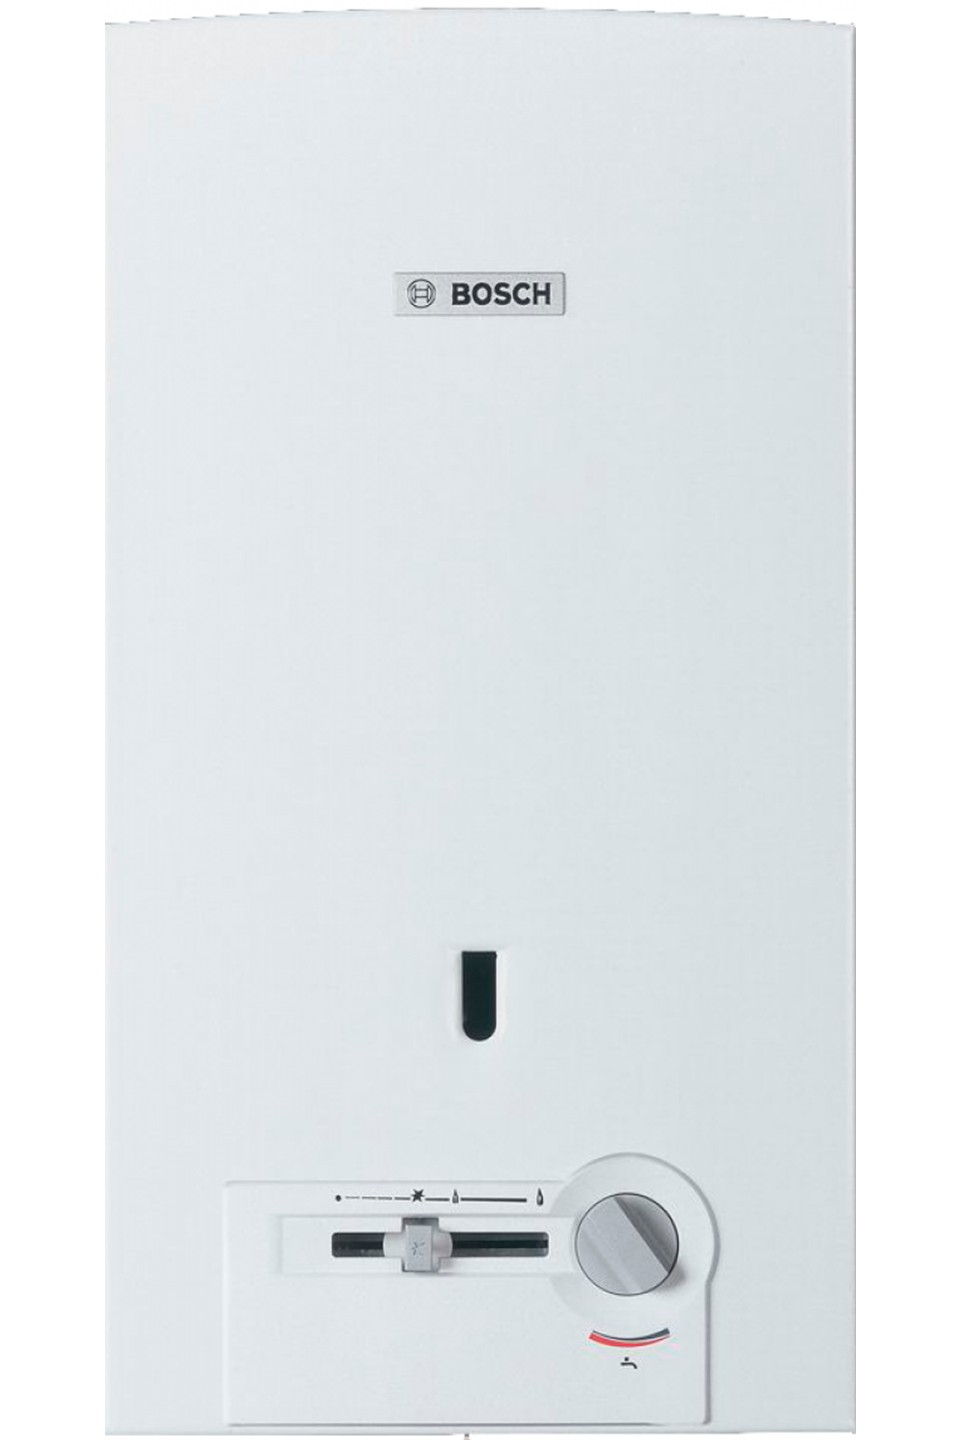 Bosch Therm 4000 O W 10-2 P (7701331010)